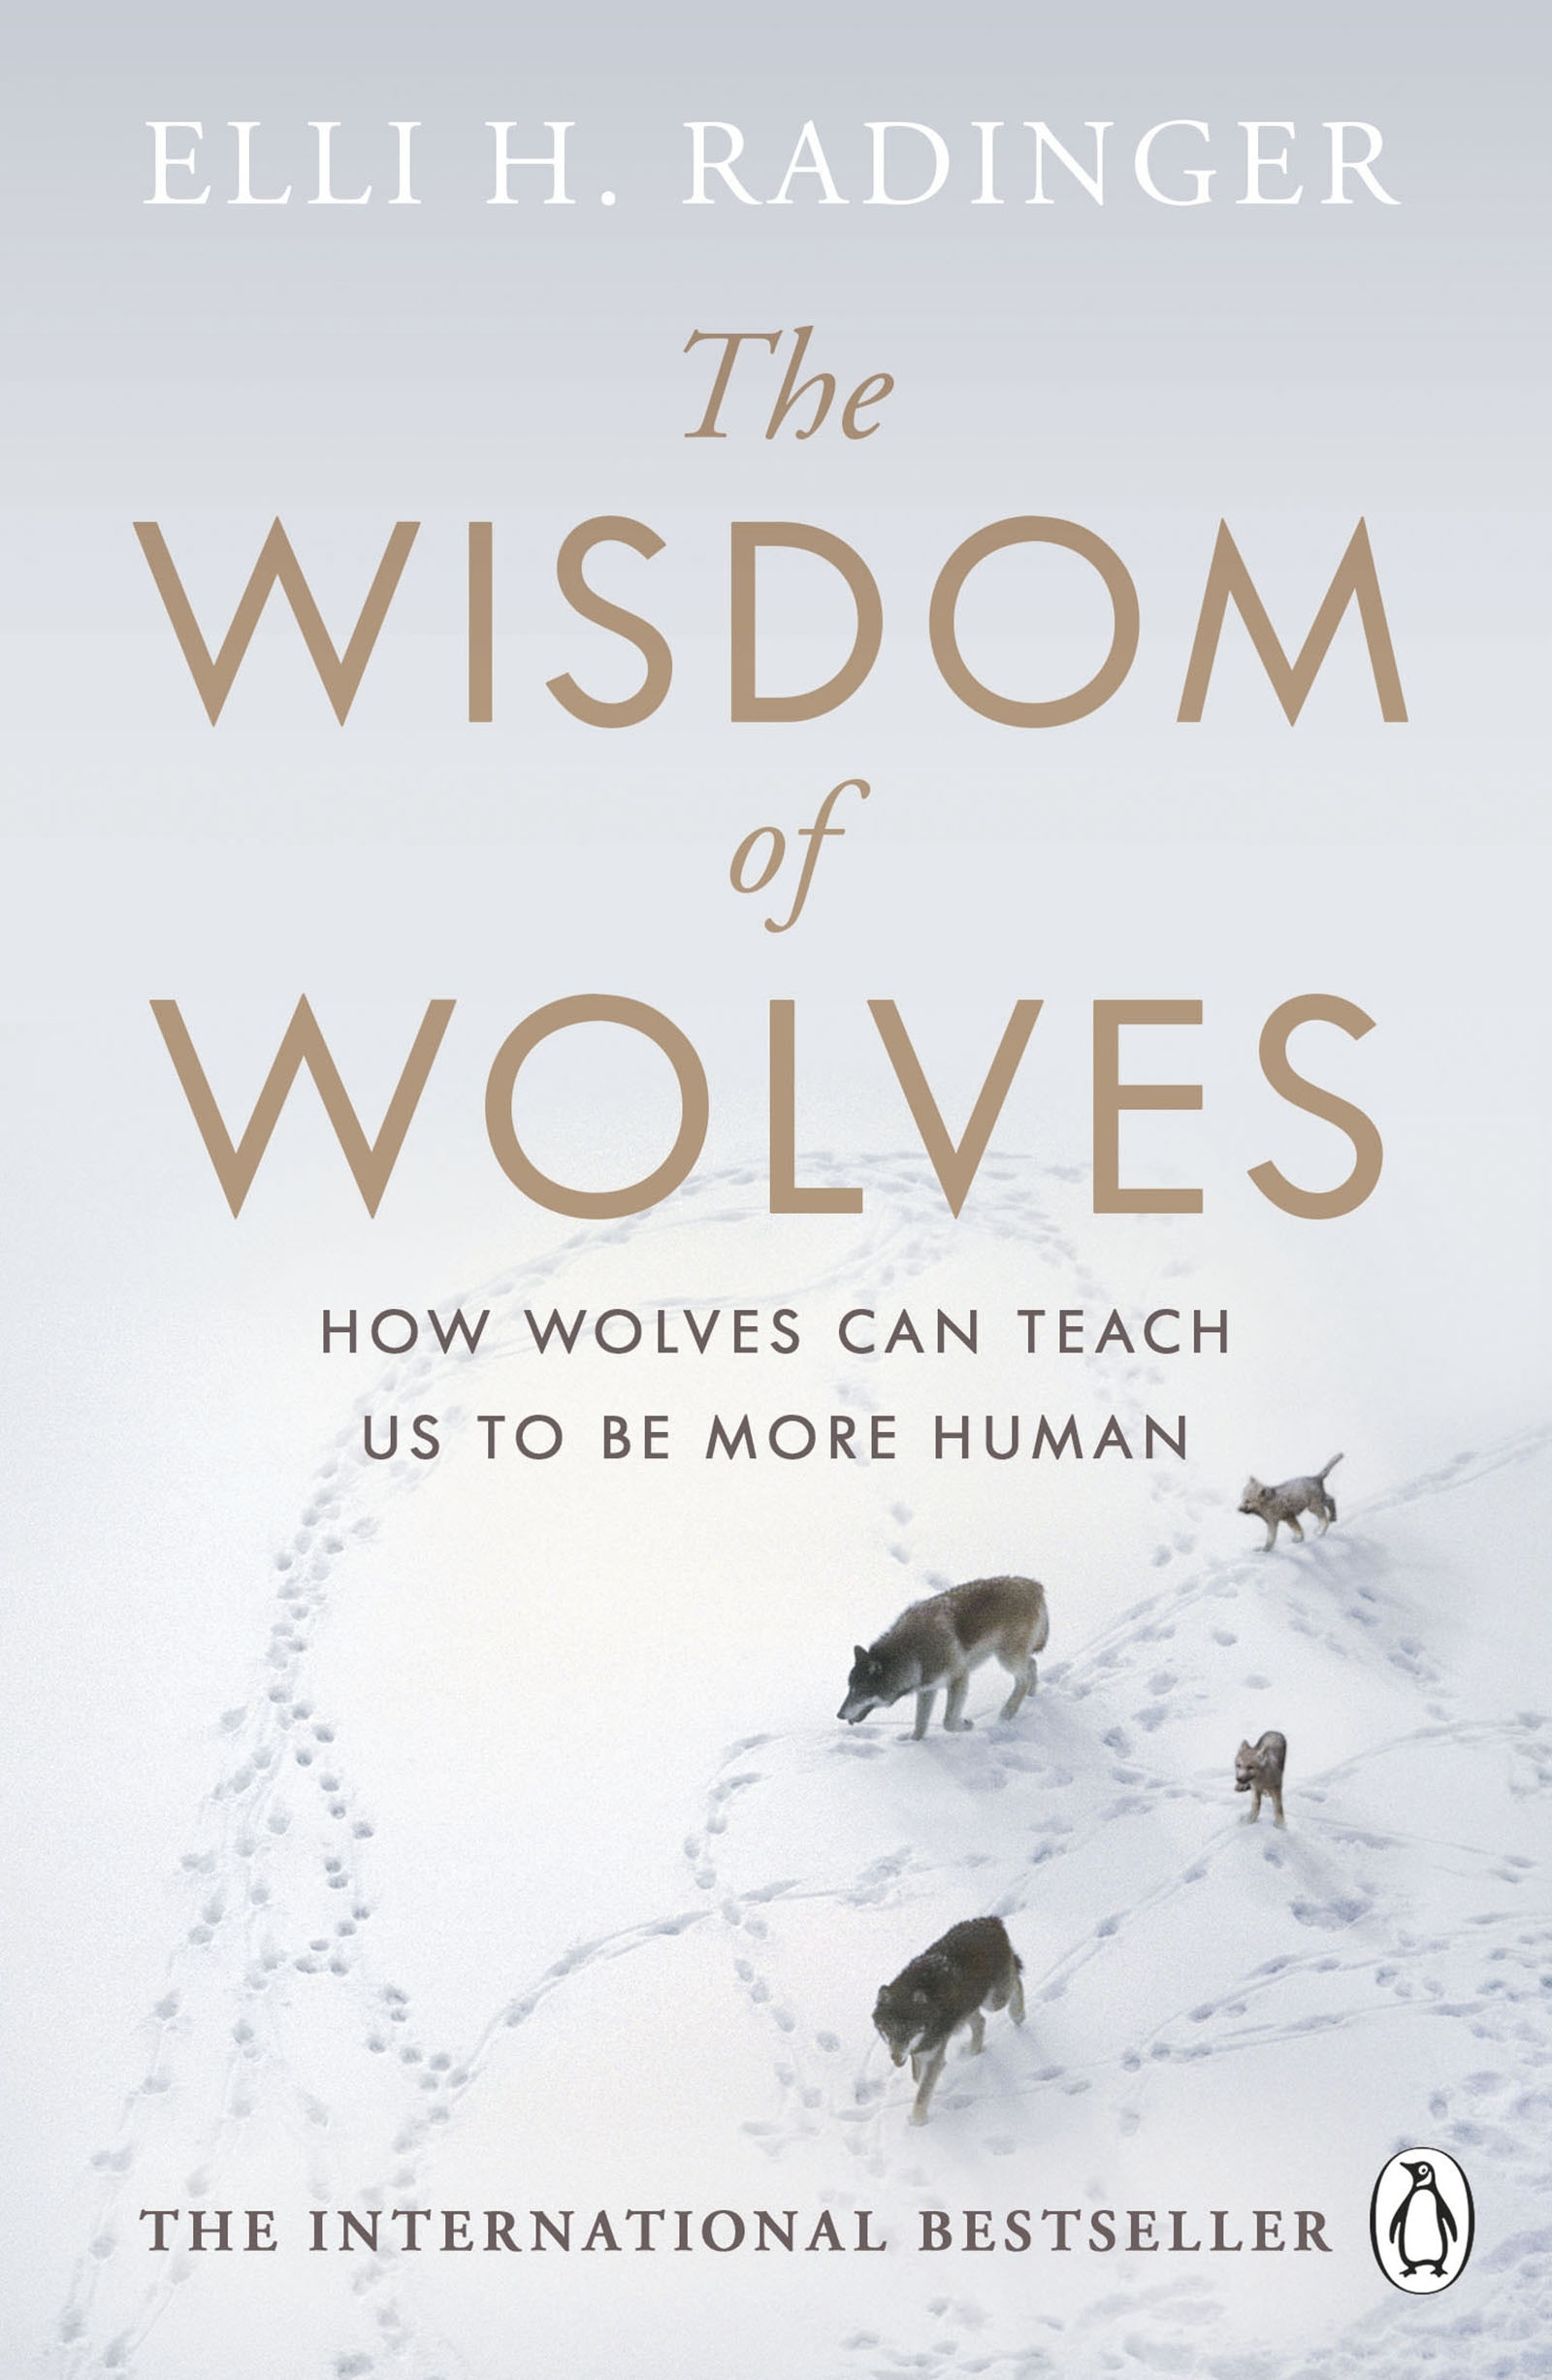 Book “The Wisdom of Wolves” by Elli H. Radinger — December 26, 2019